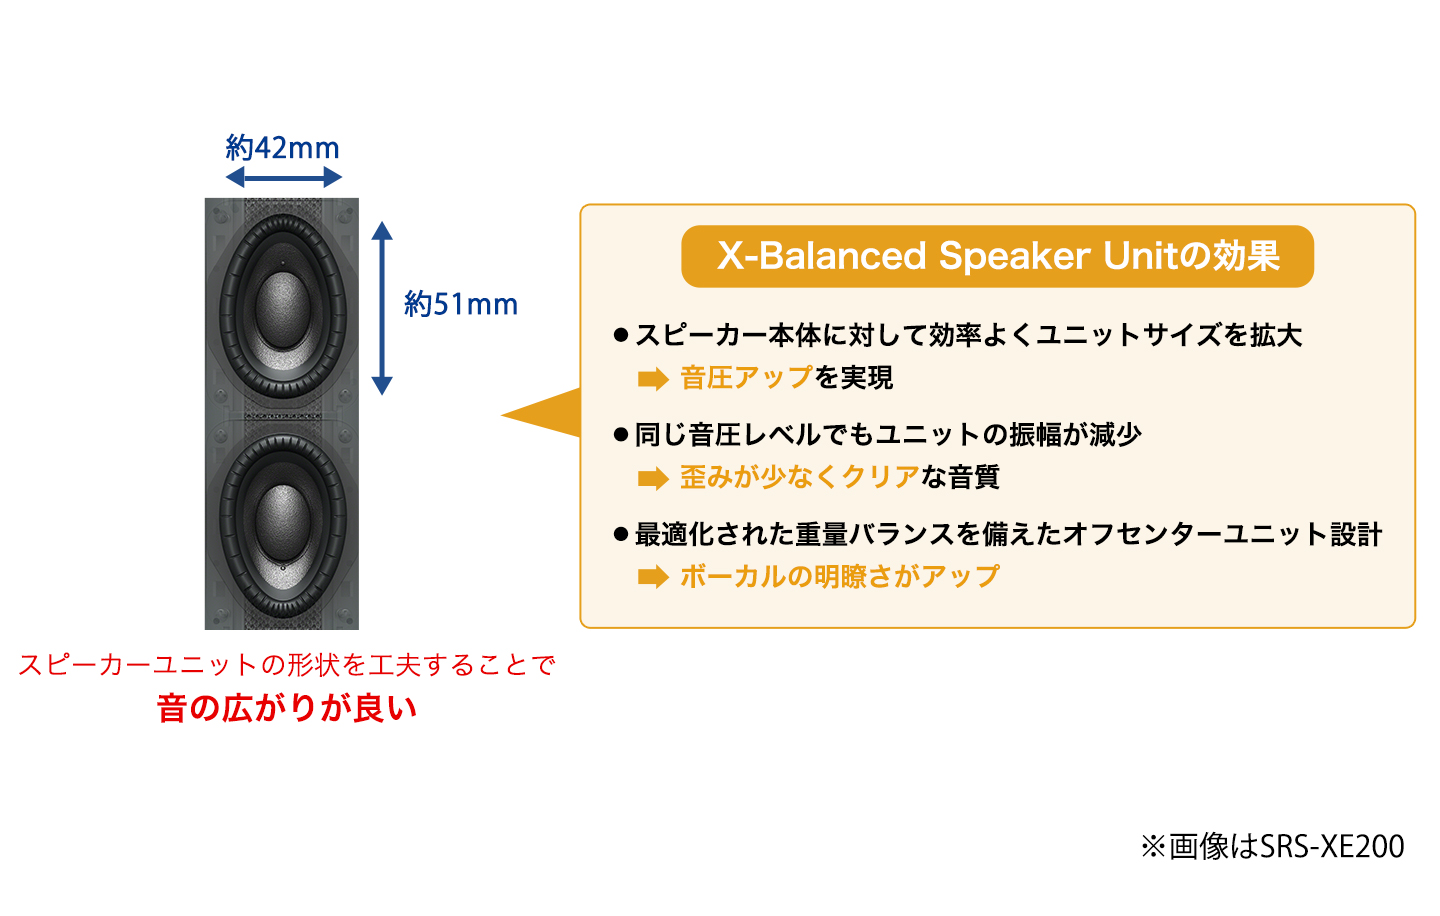 uX-Balanced Speaker Unitv̗p